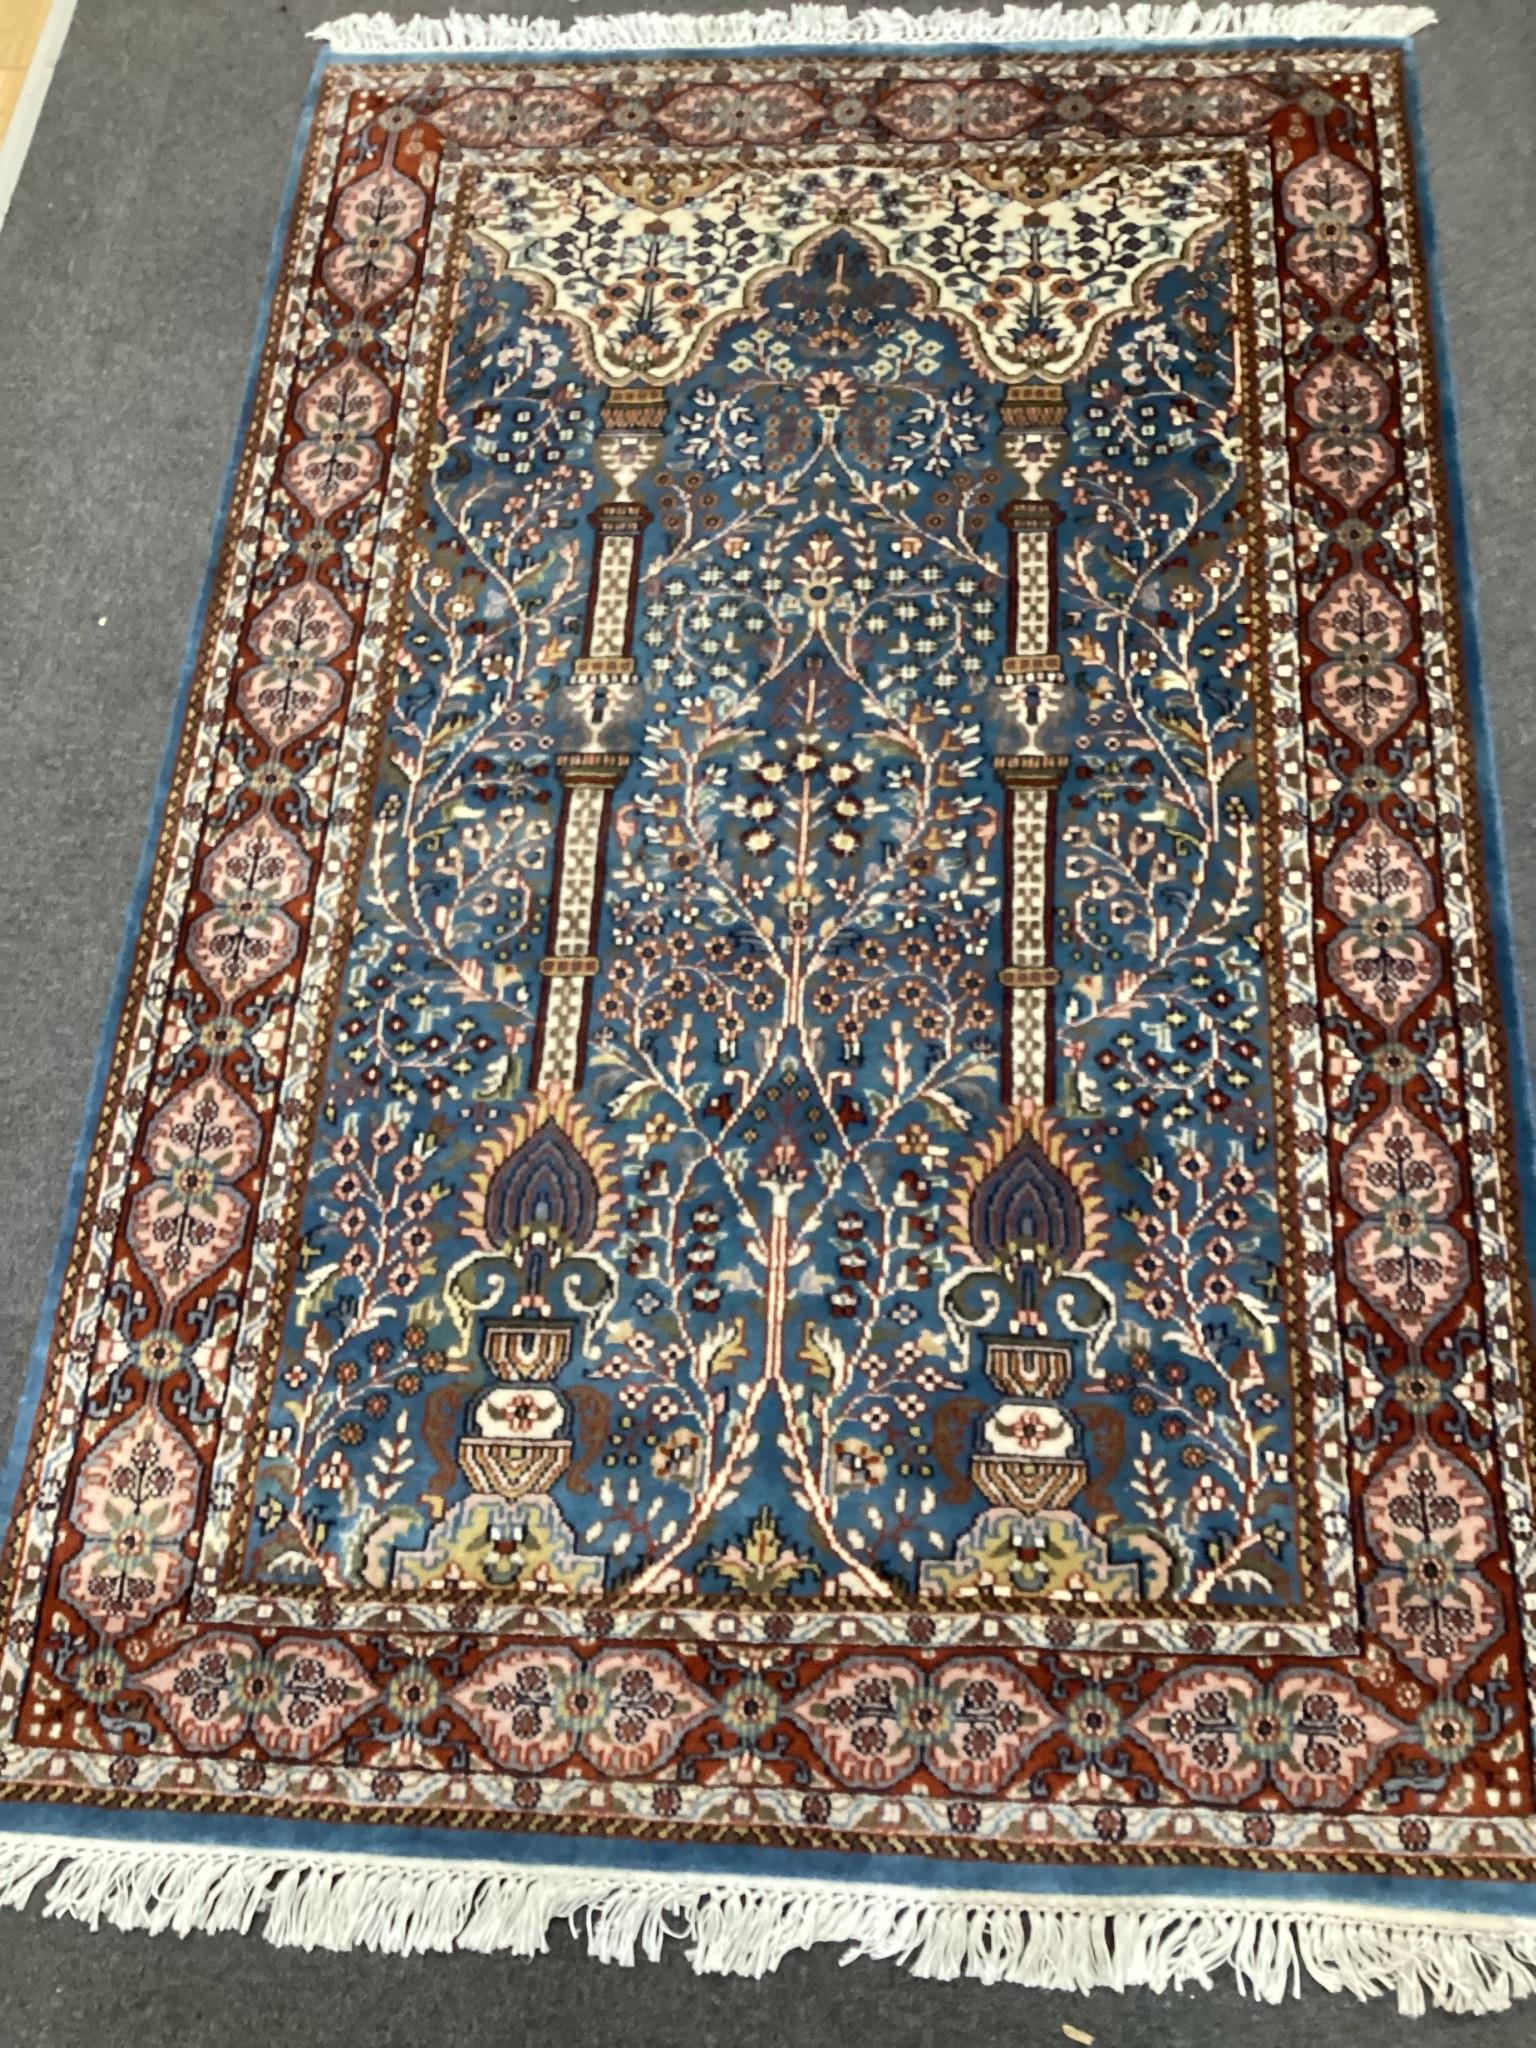 North West Persian blue ground rug, 190cm x 126cm                                                                                                                                                                           